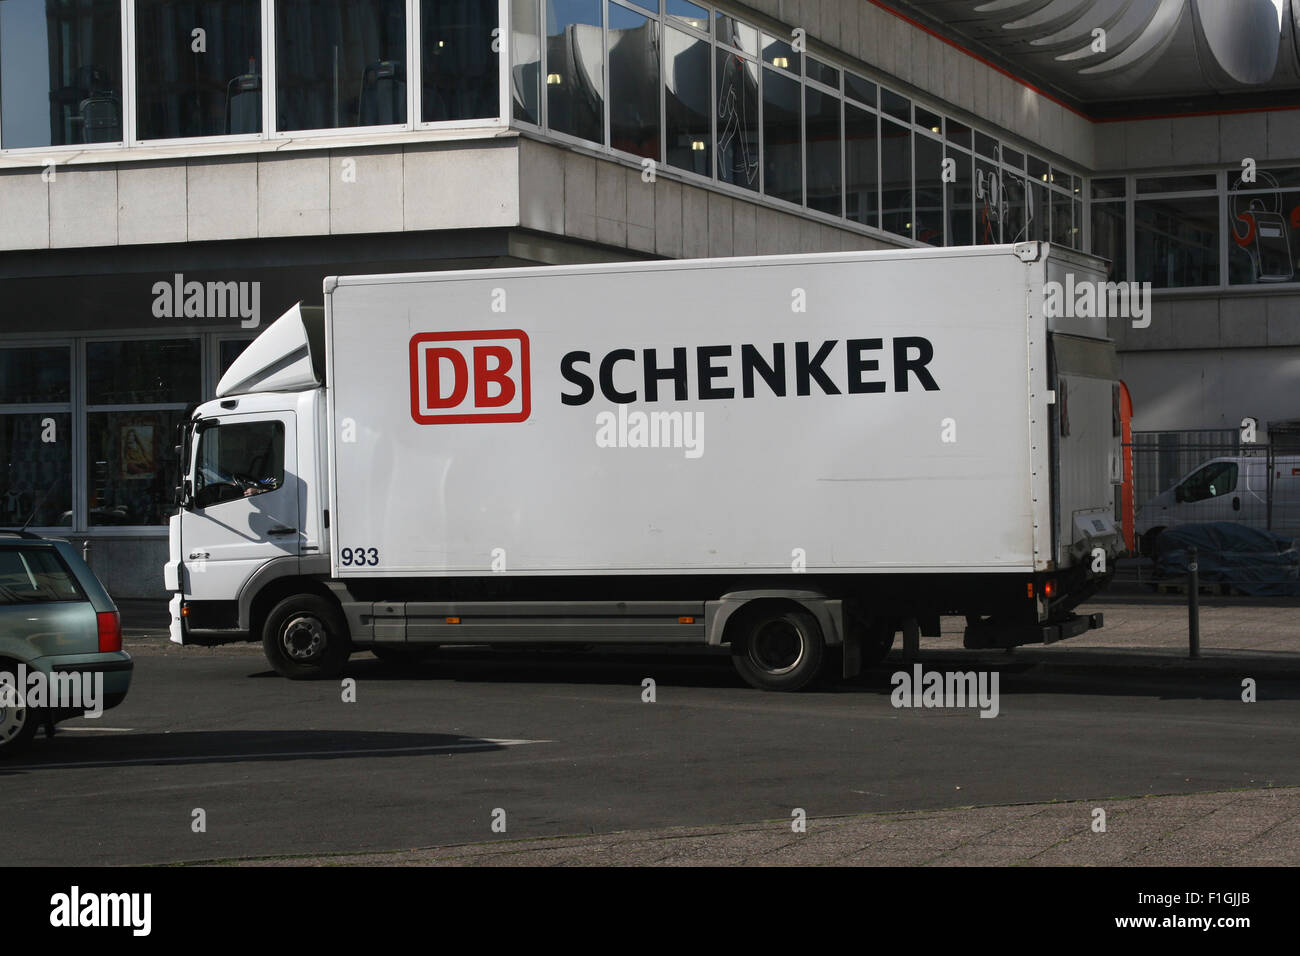 DB SCHENKER Stock Photo 87032355 Alamy